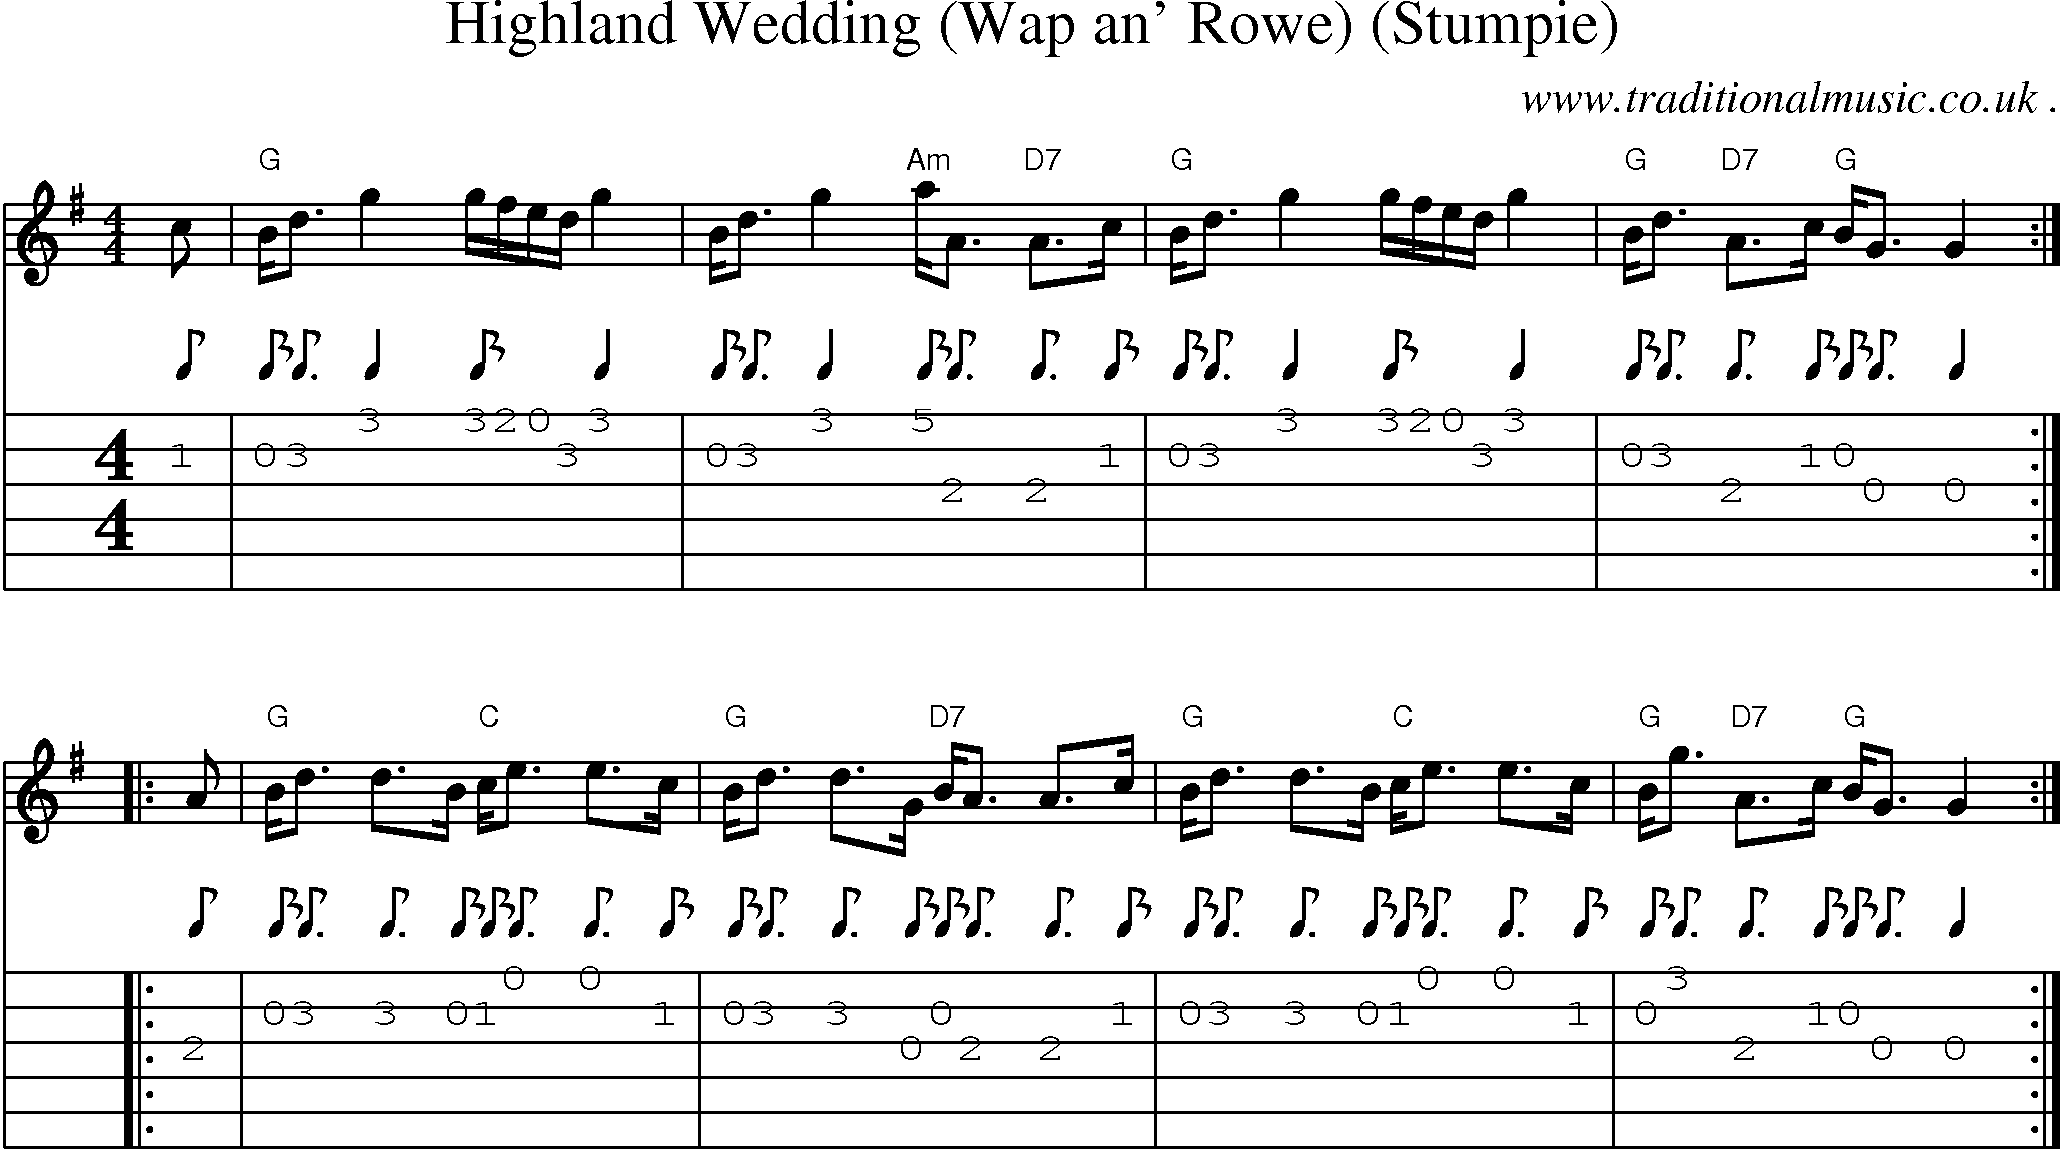 Sheet-music  score, Chords and Guitar Tabs for Highland Wedding Wap An Rowe Stumpie